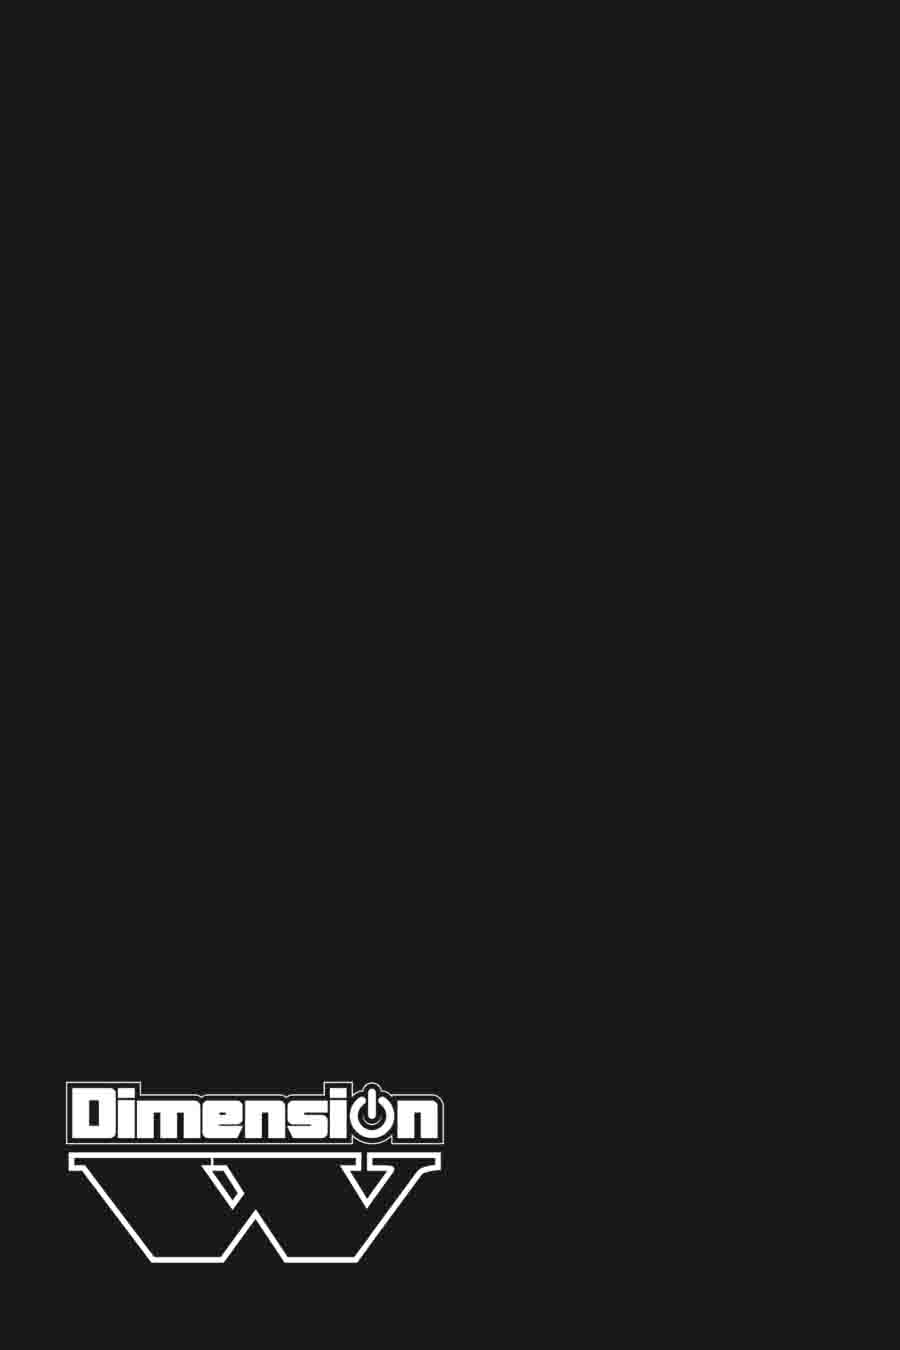 Dimension W 69 27